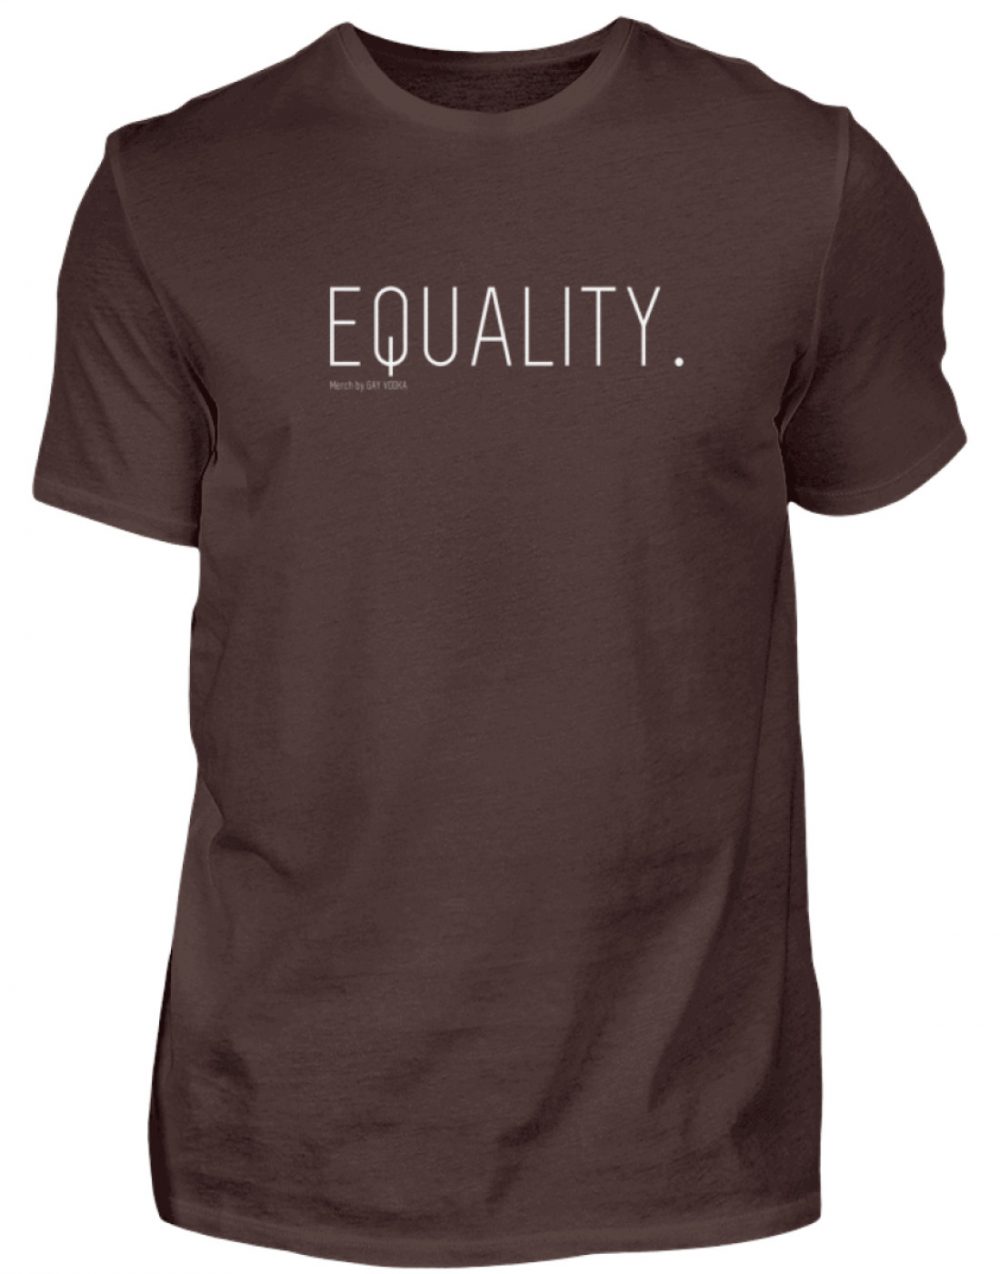 EQUALITY. - Herren Premiumshirt-1074